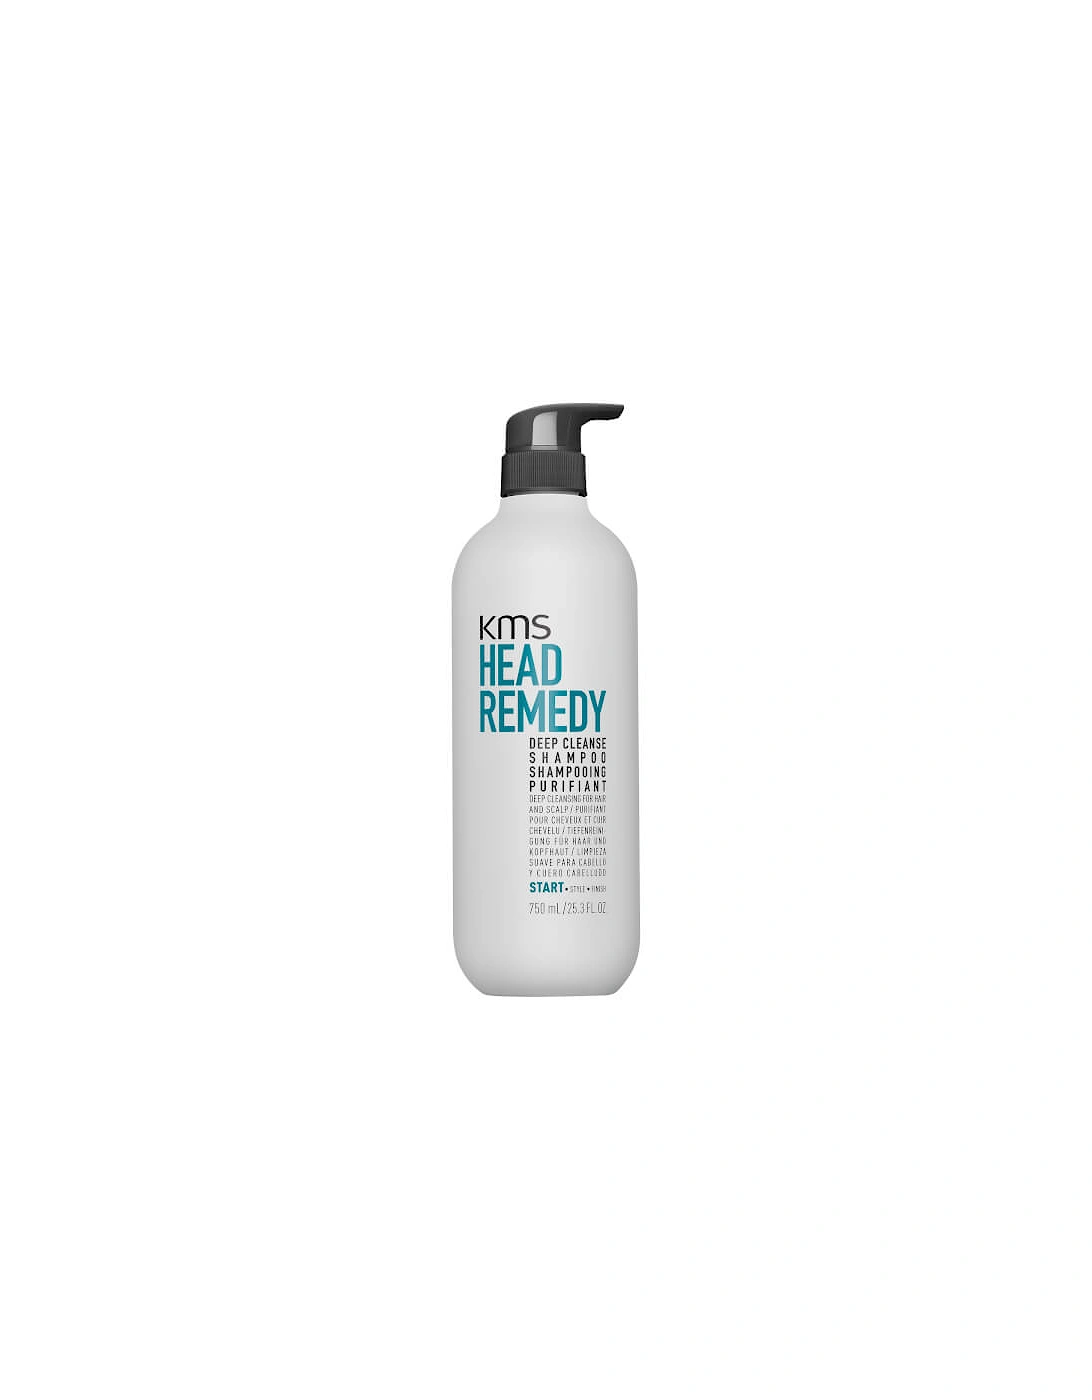 HeadRemedy Deep Cleanse Shampoo 750ml, 2 of 1